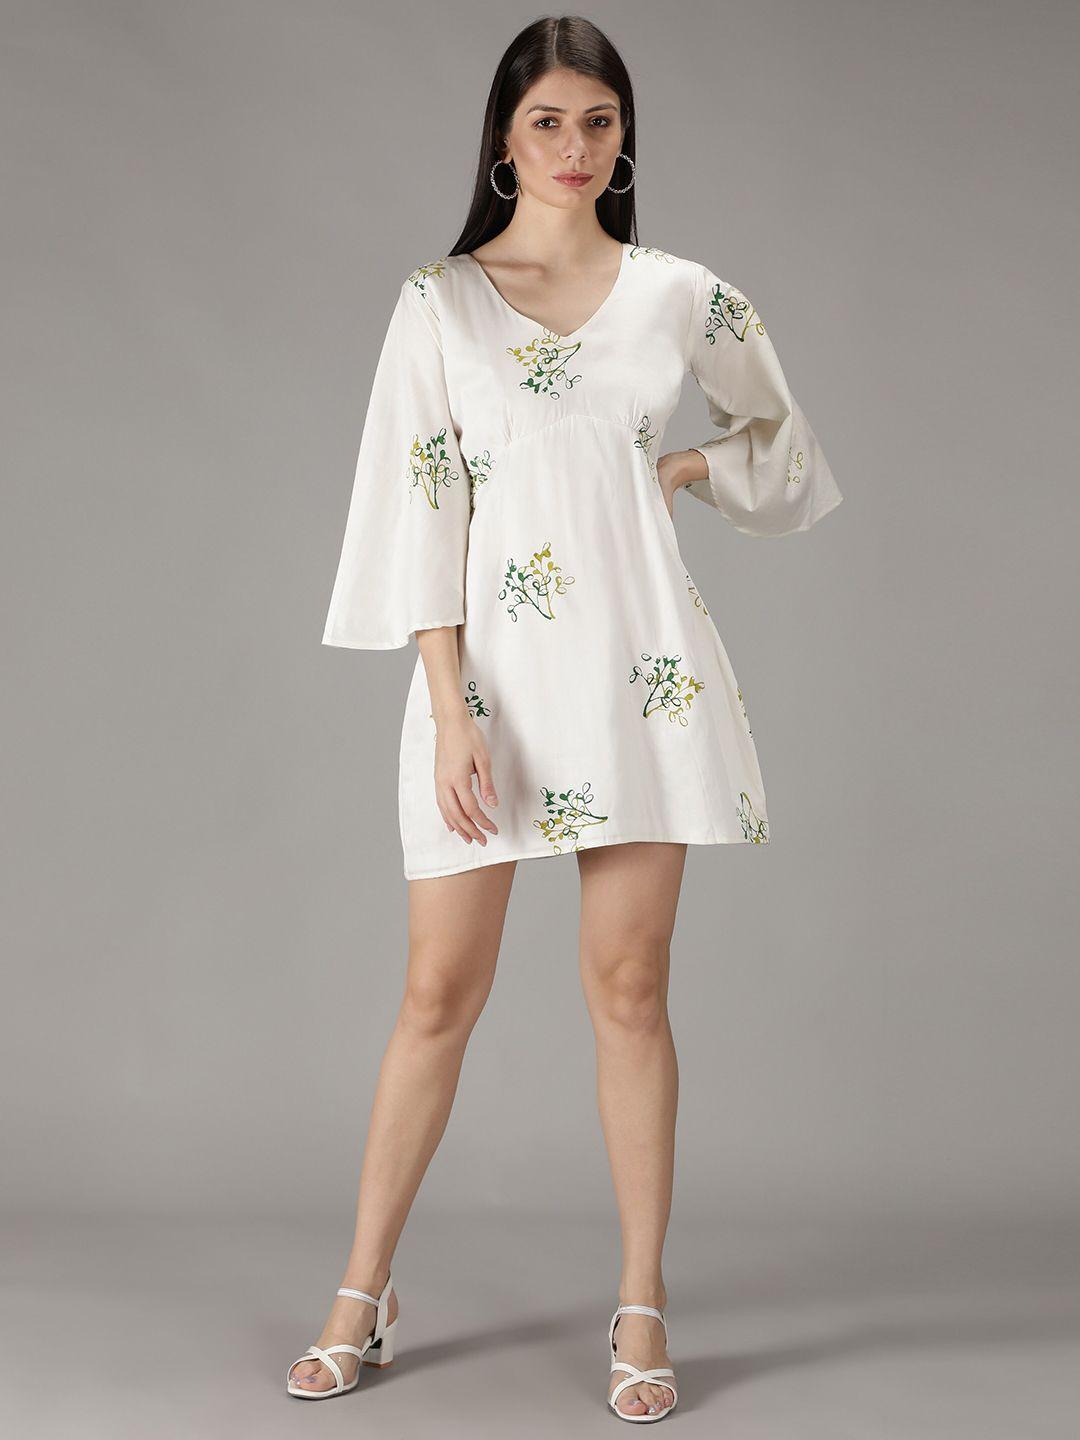 sajke off white & green floral a-line mini dress